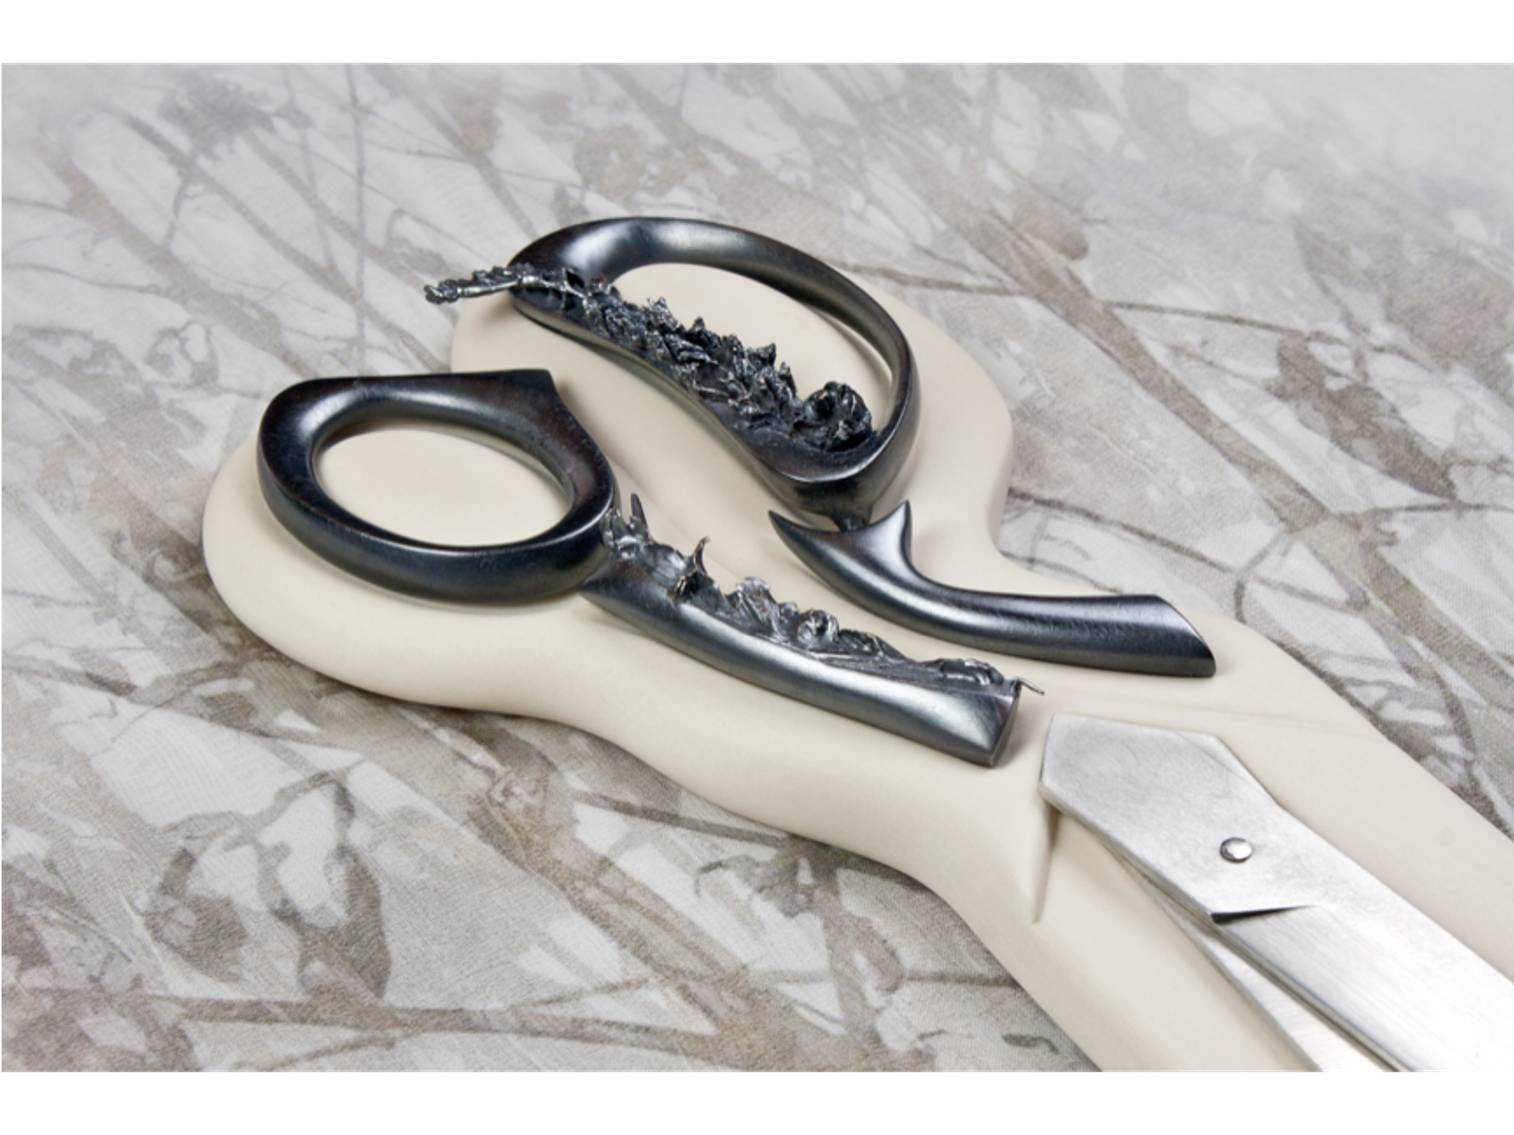 sculpture of handmade scissors with decorative handles